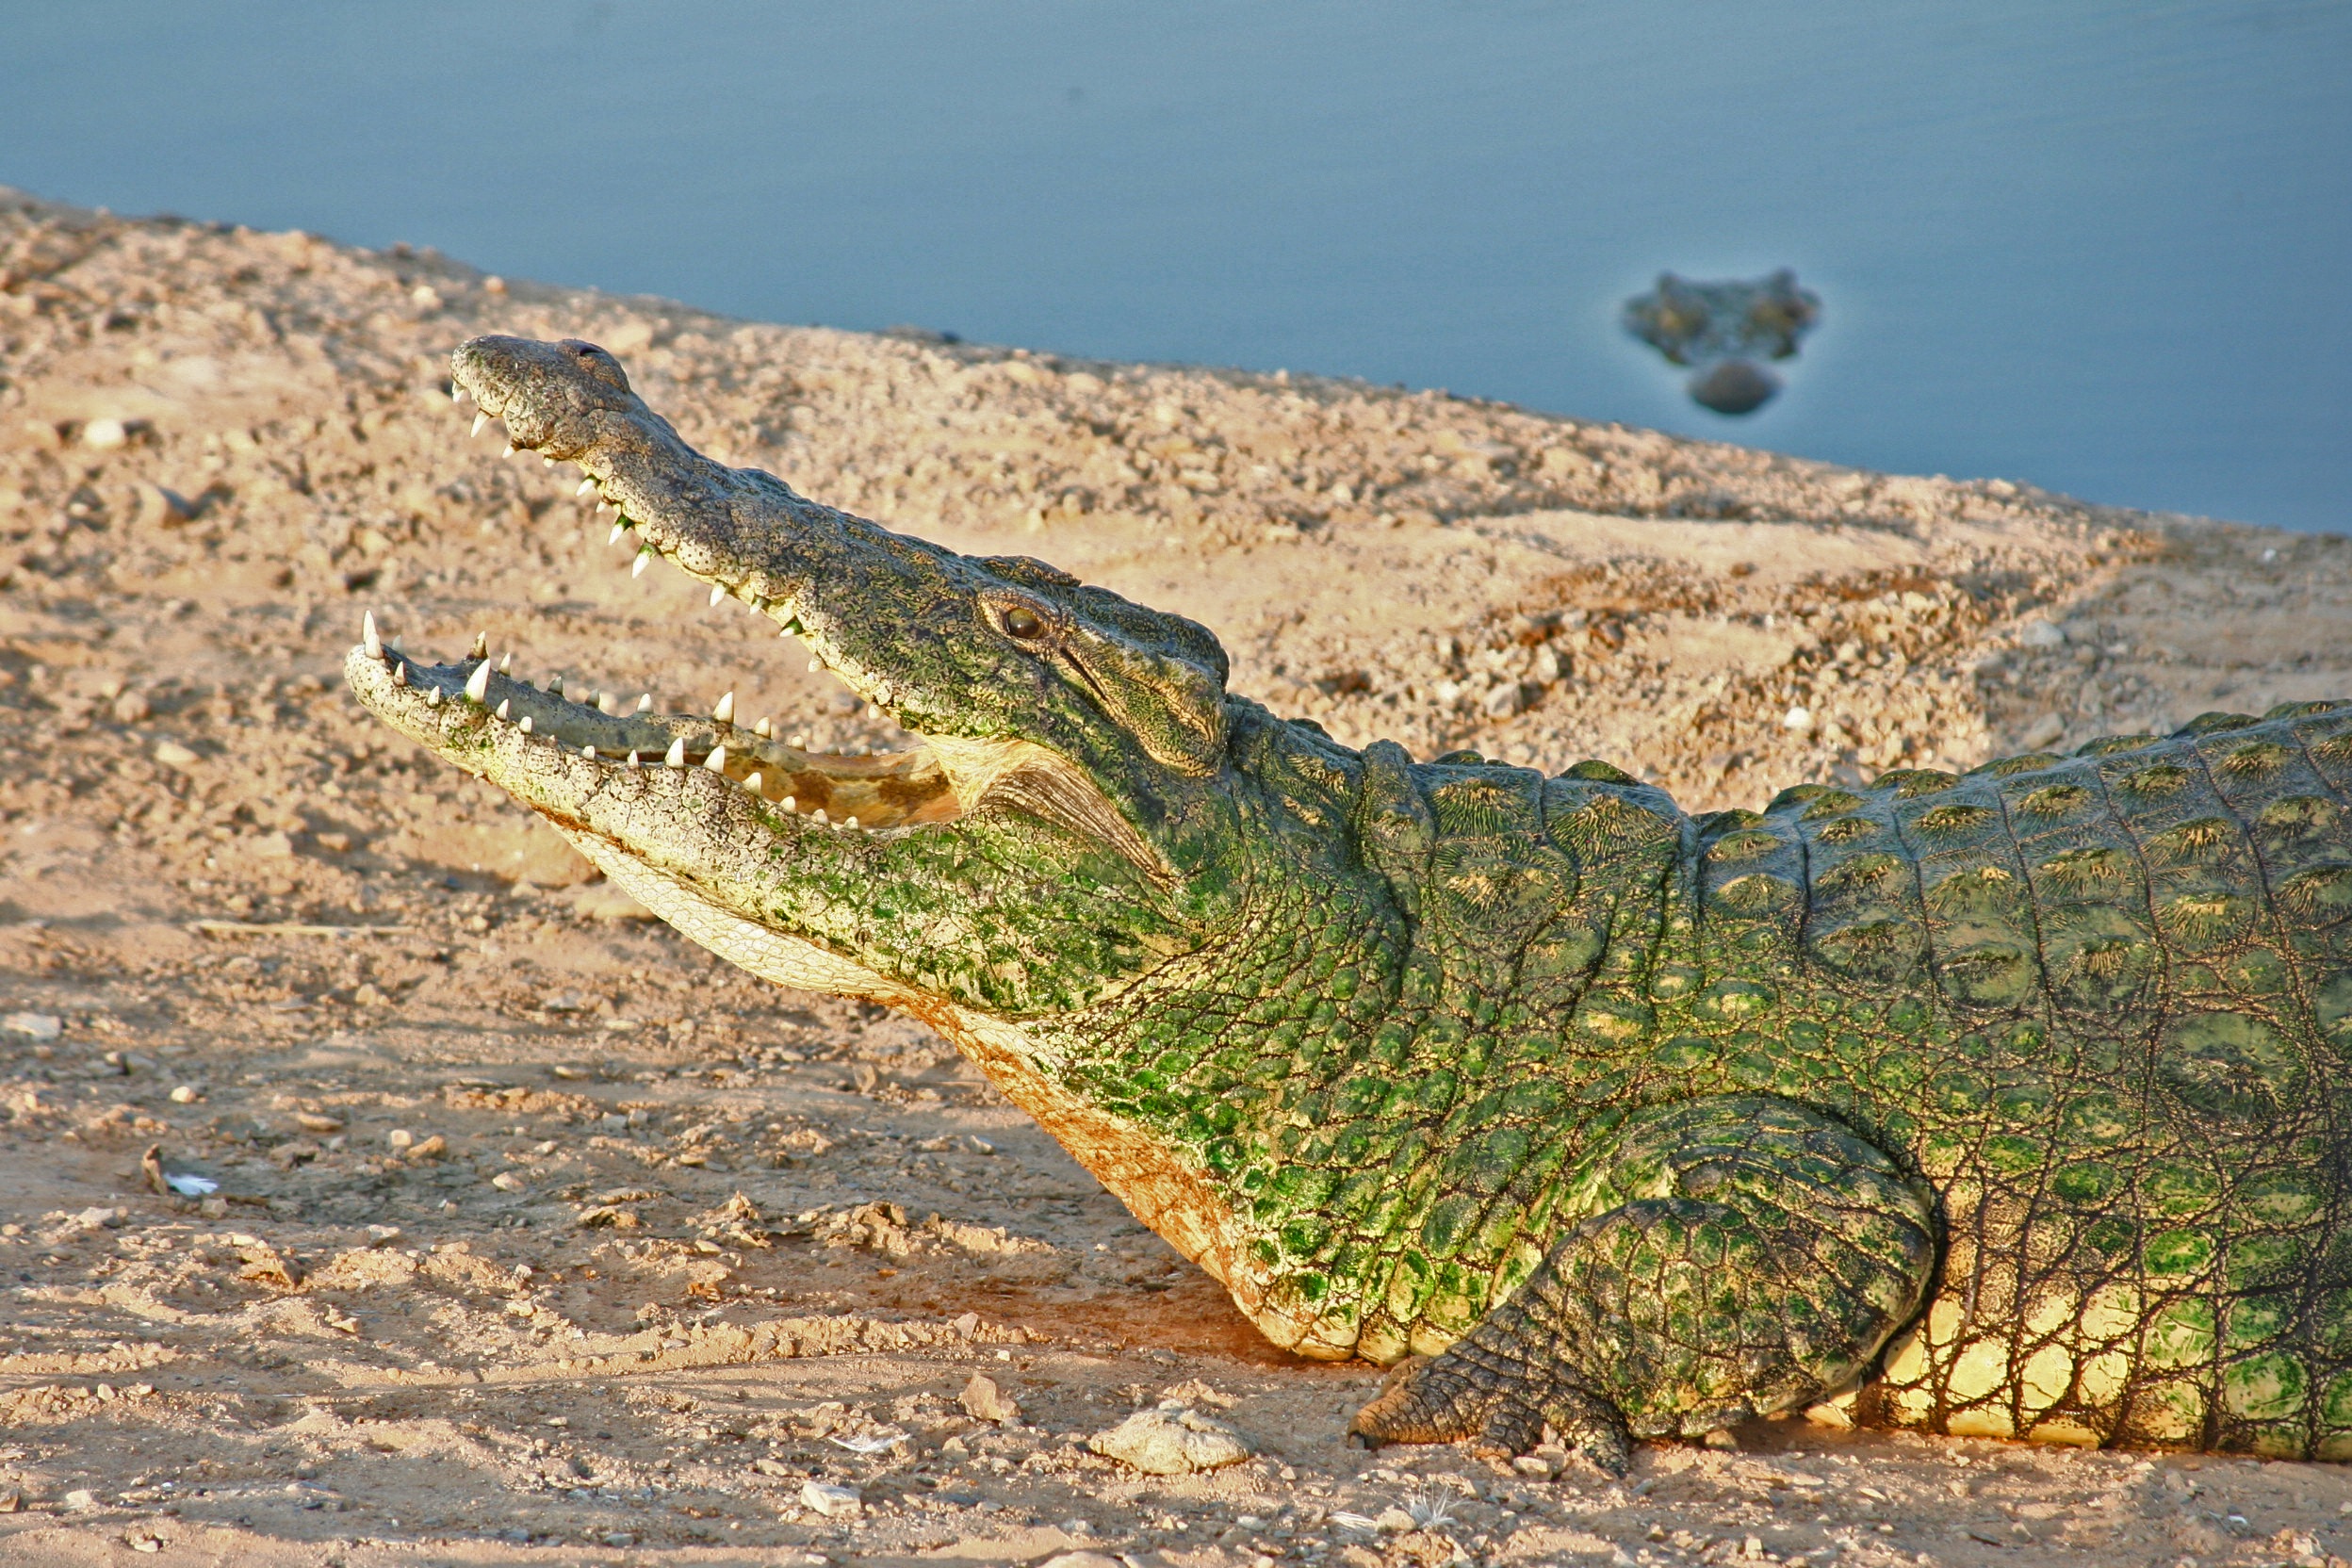 Crocodile on the Bank, Animal, Bank, Croc, Crocodile, HQ Photo